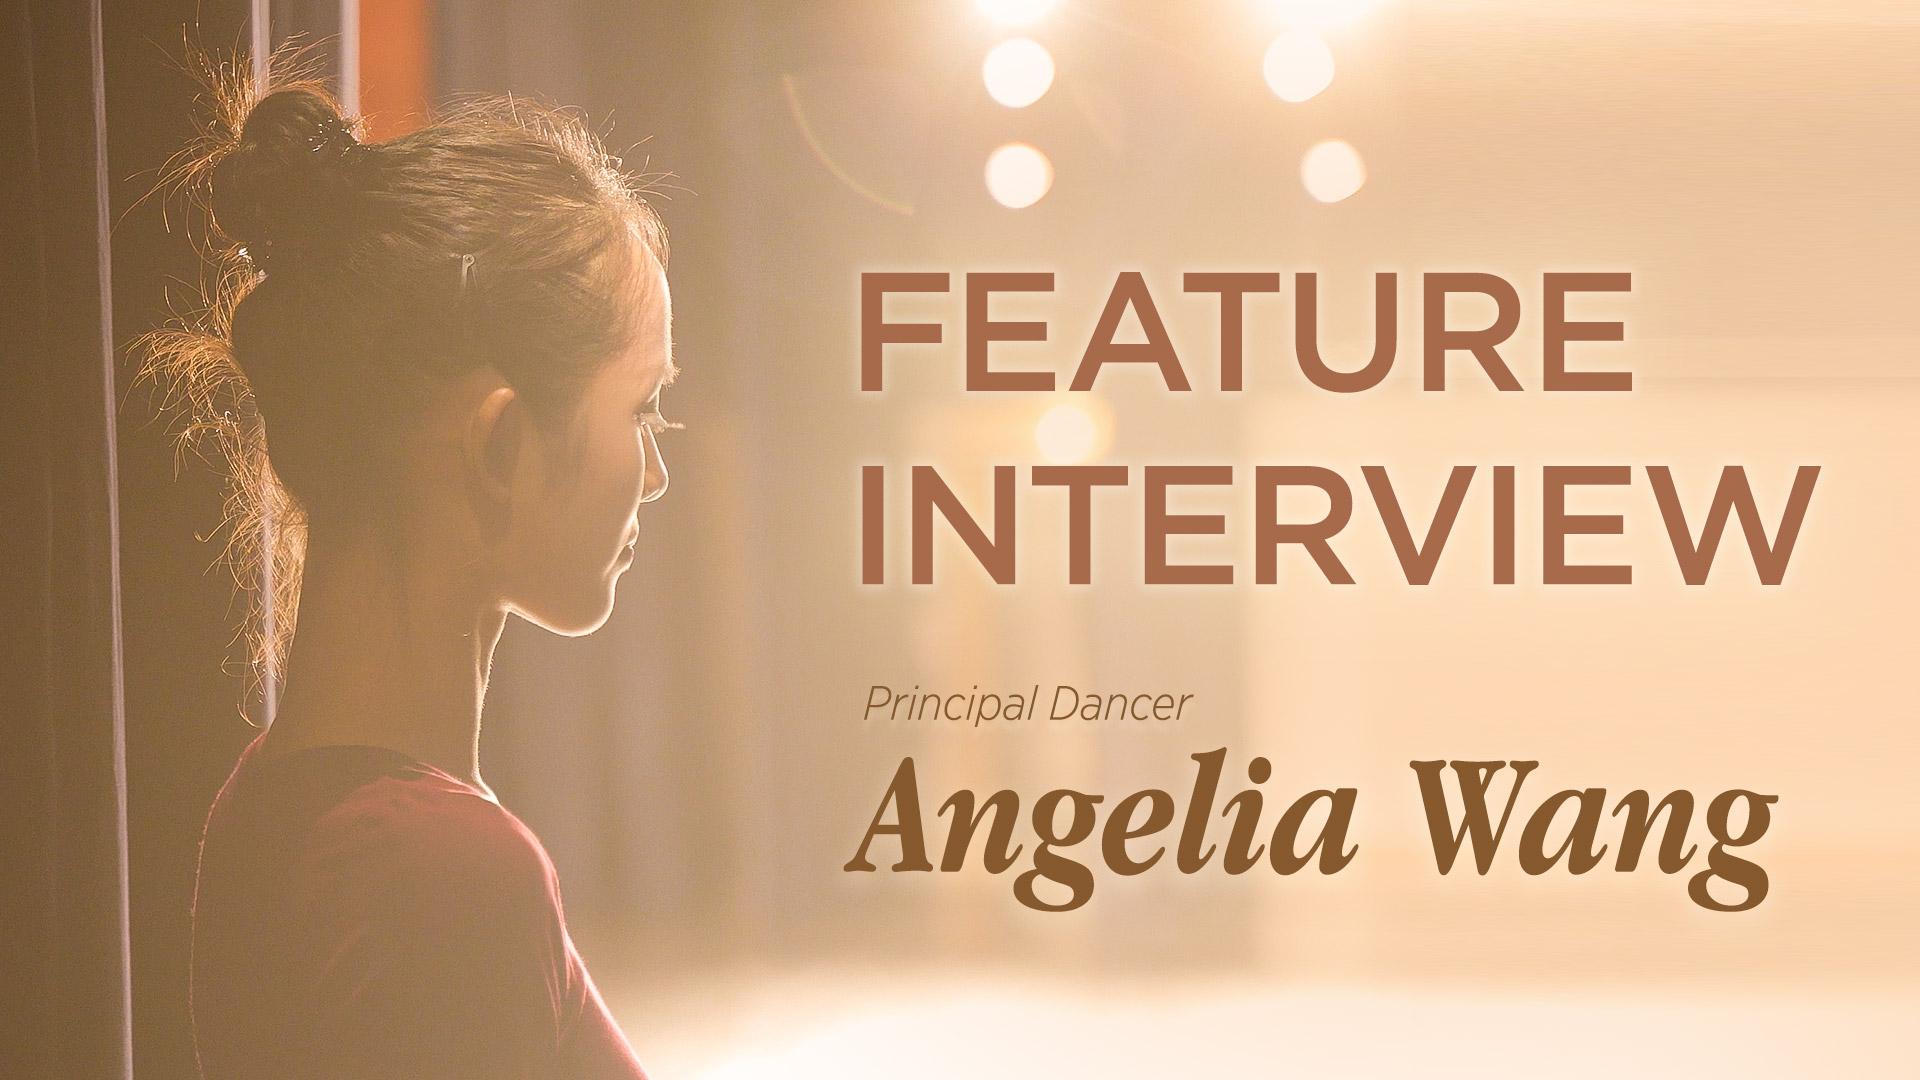 Meet Principal Dancer Angelia Wang